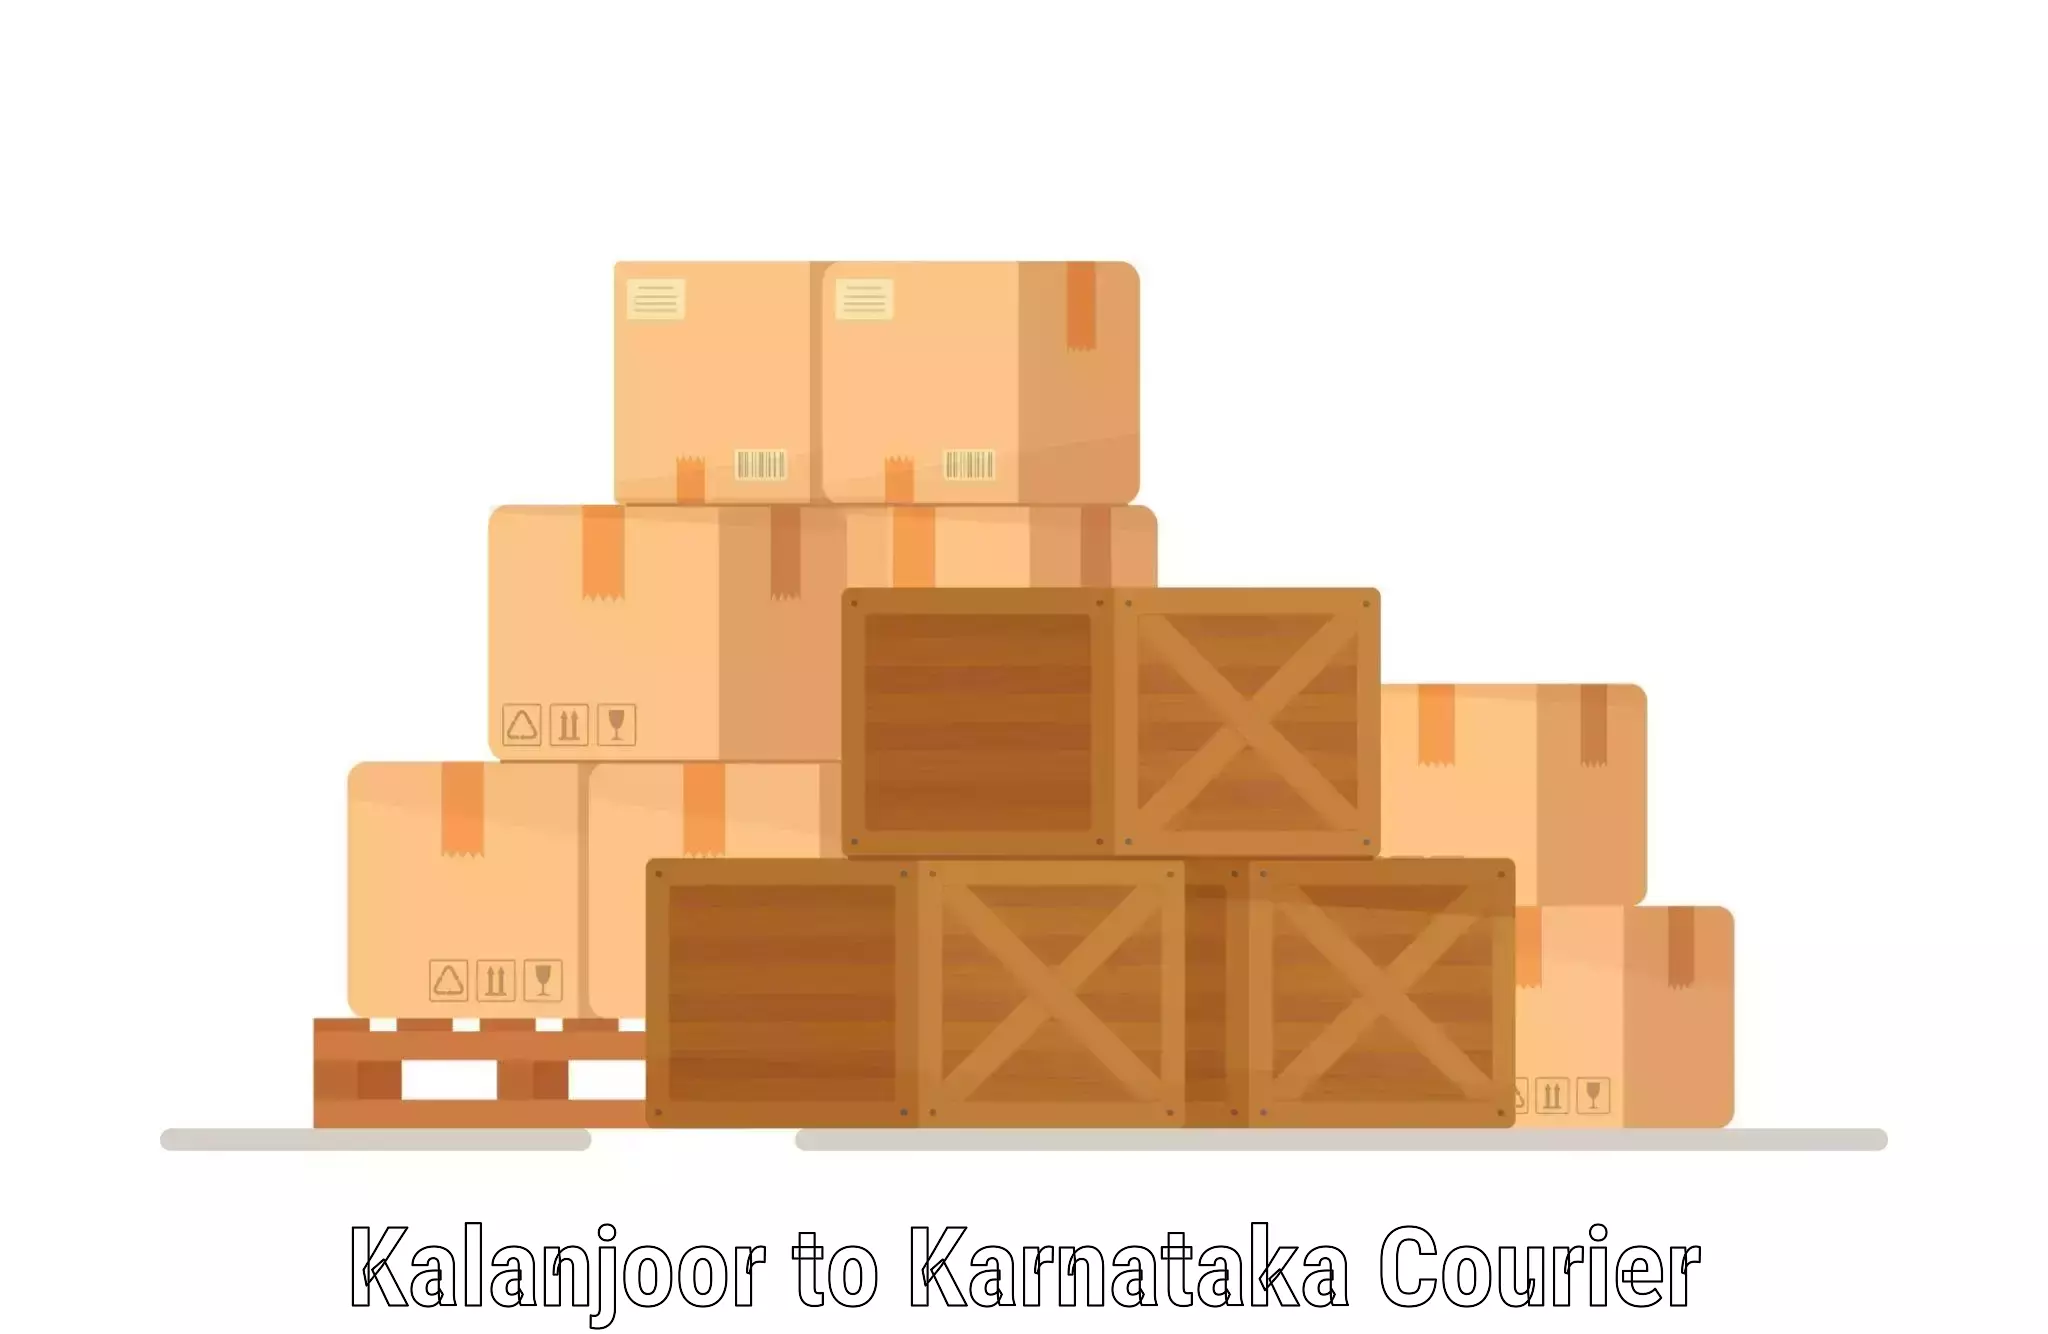 Efficient order fulfillment in Kalanjoor to Yellapur